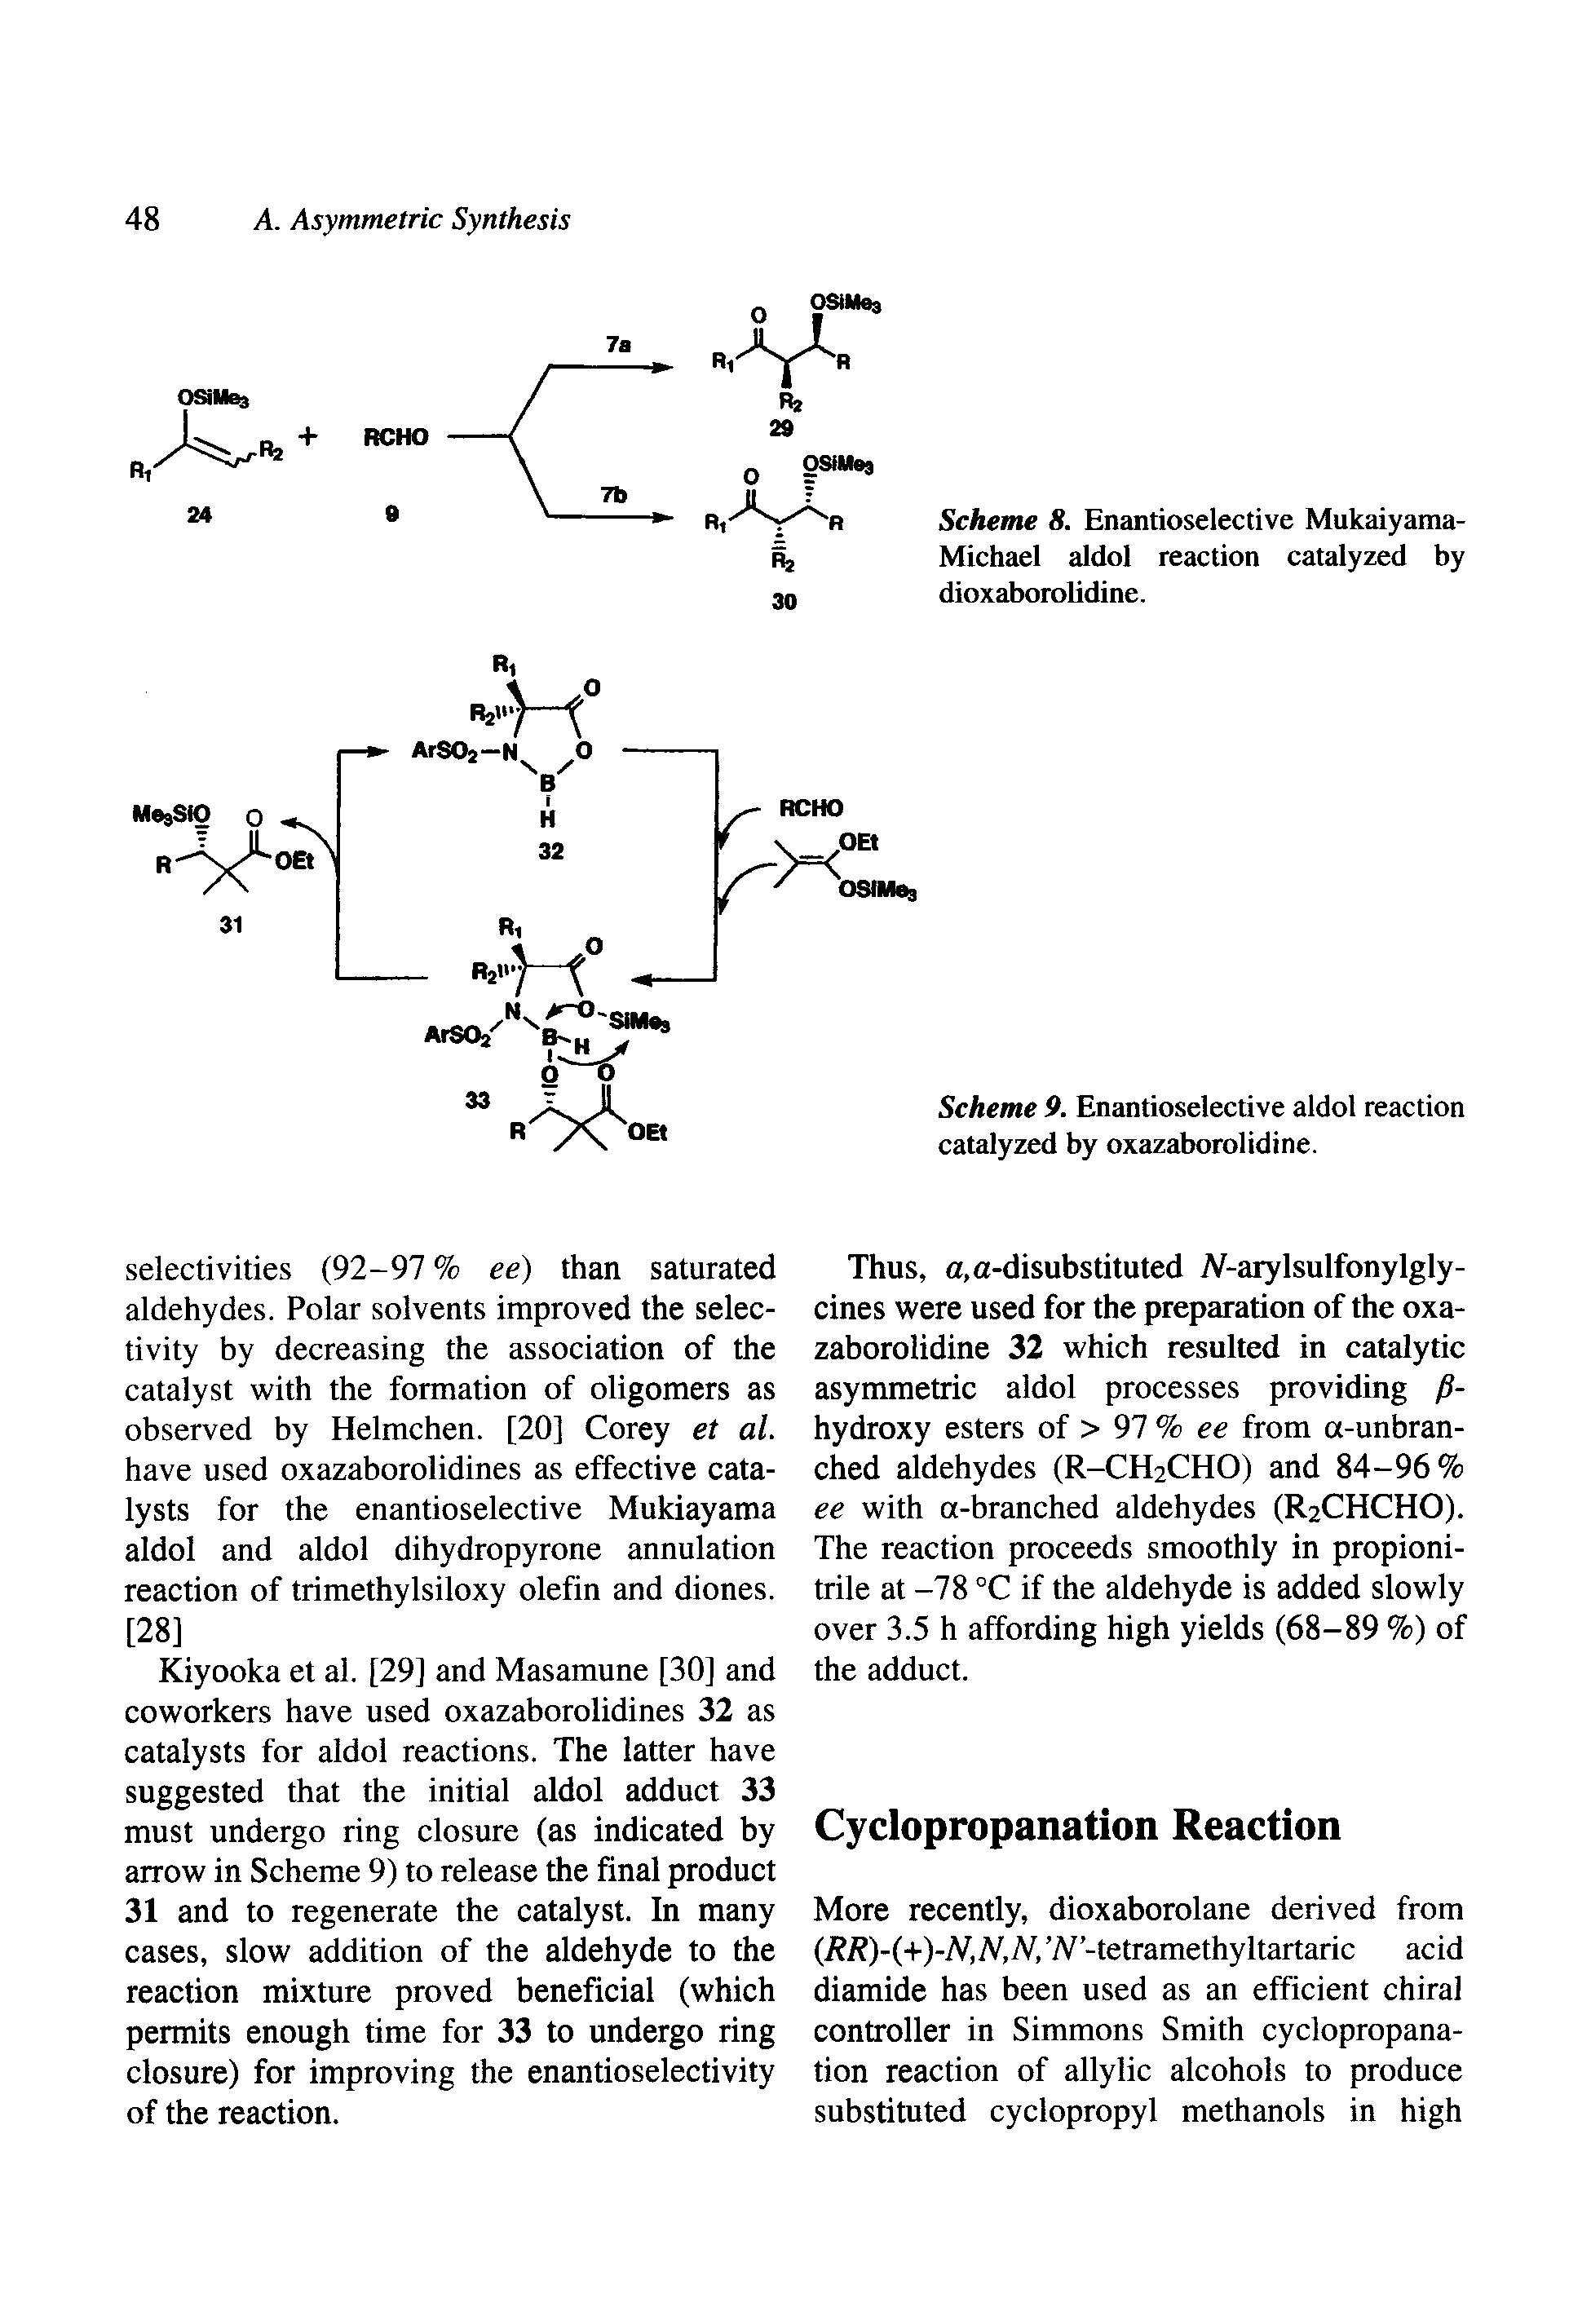 Scheme 9. Enantioselective aldol reaction catalyzed by oxazaborolidine.